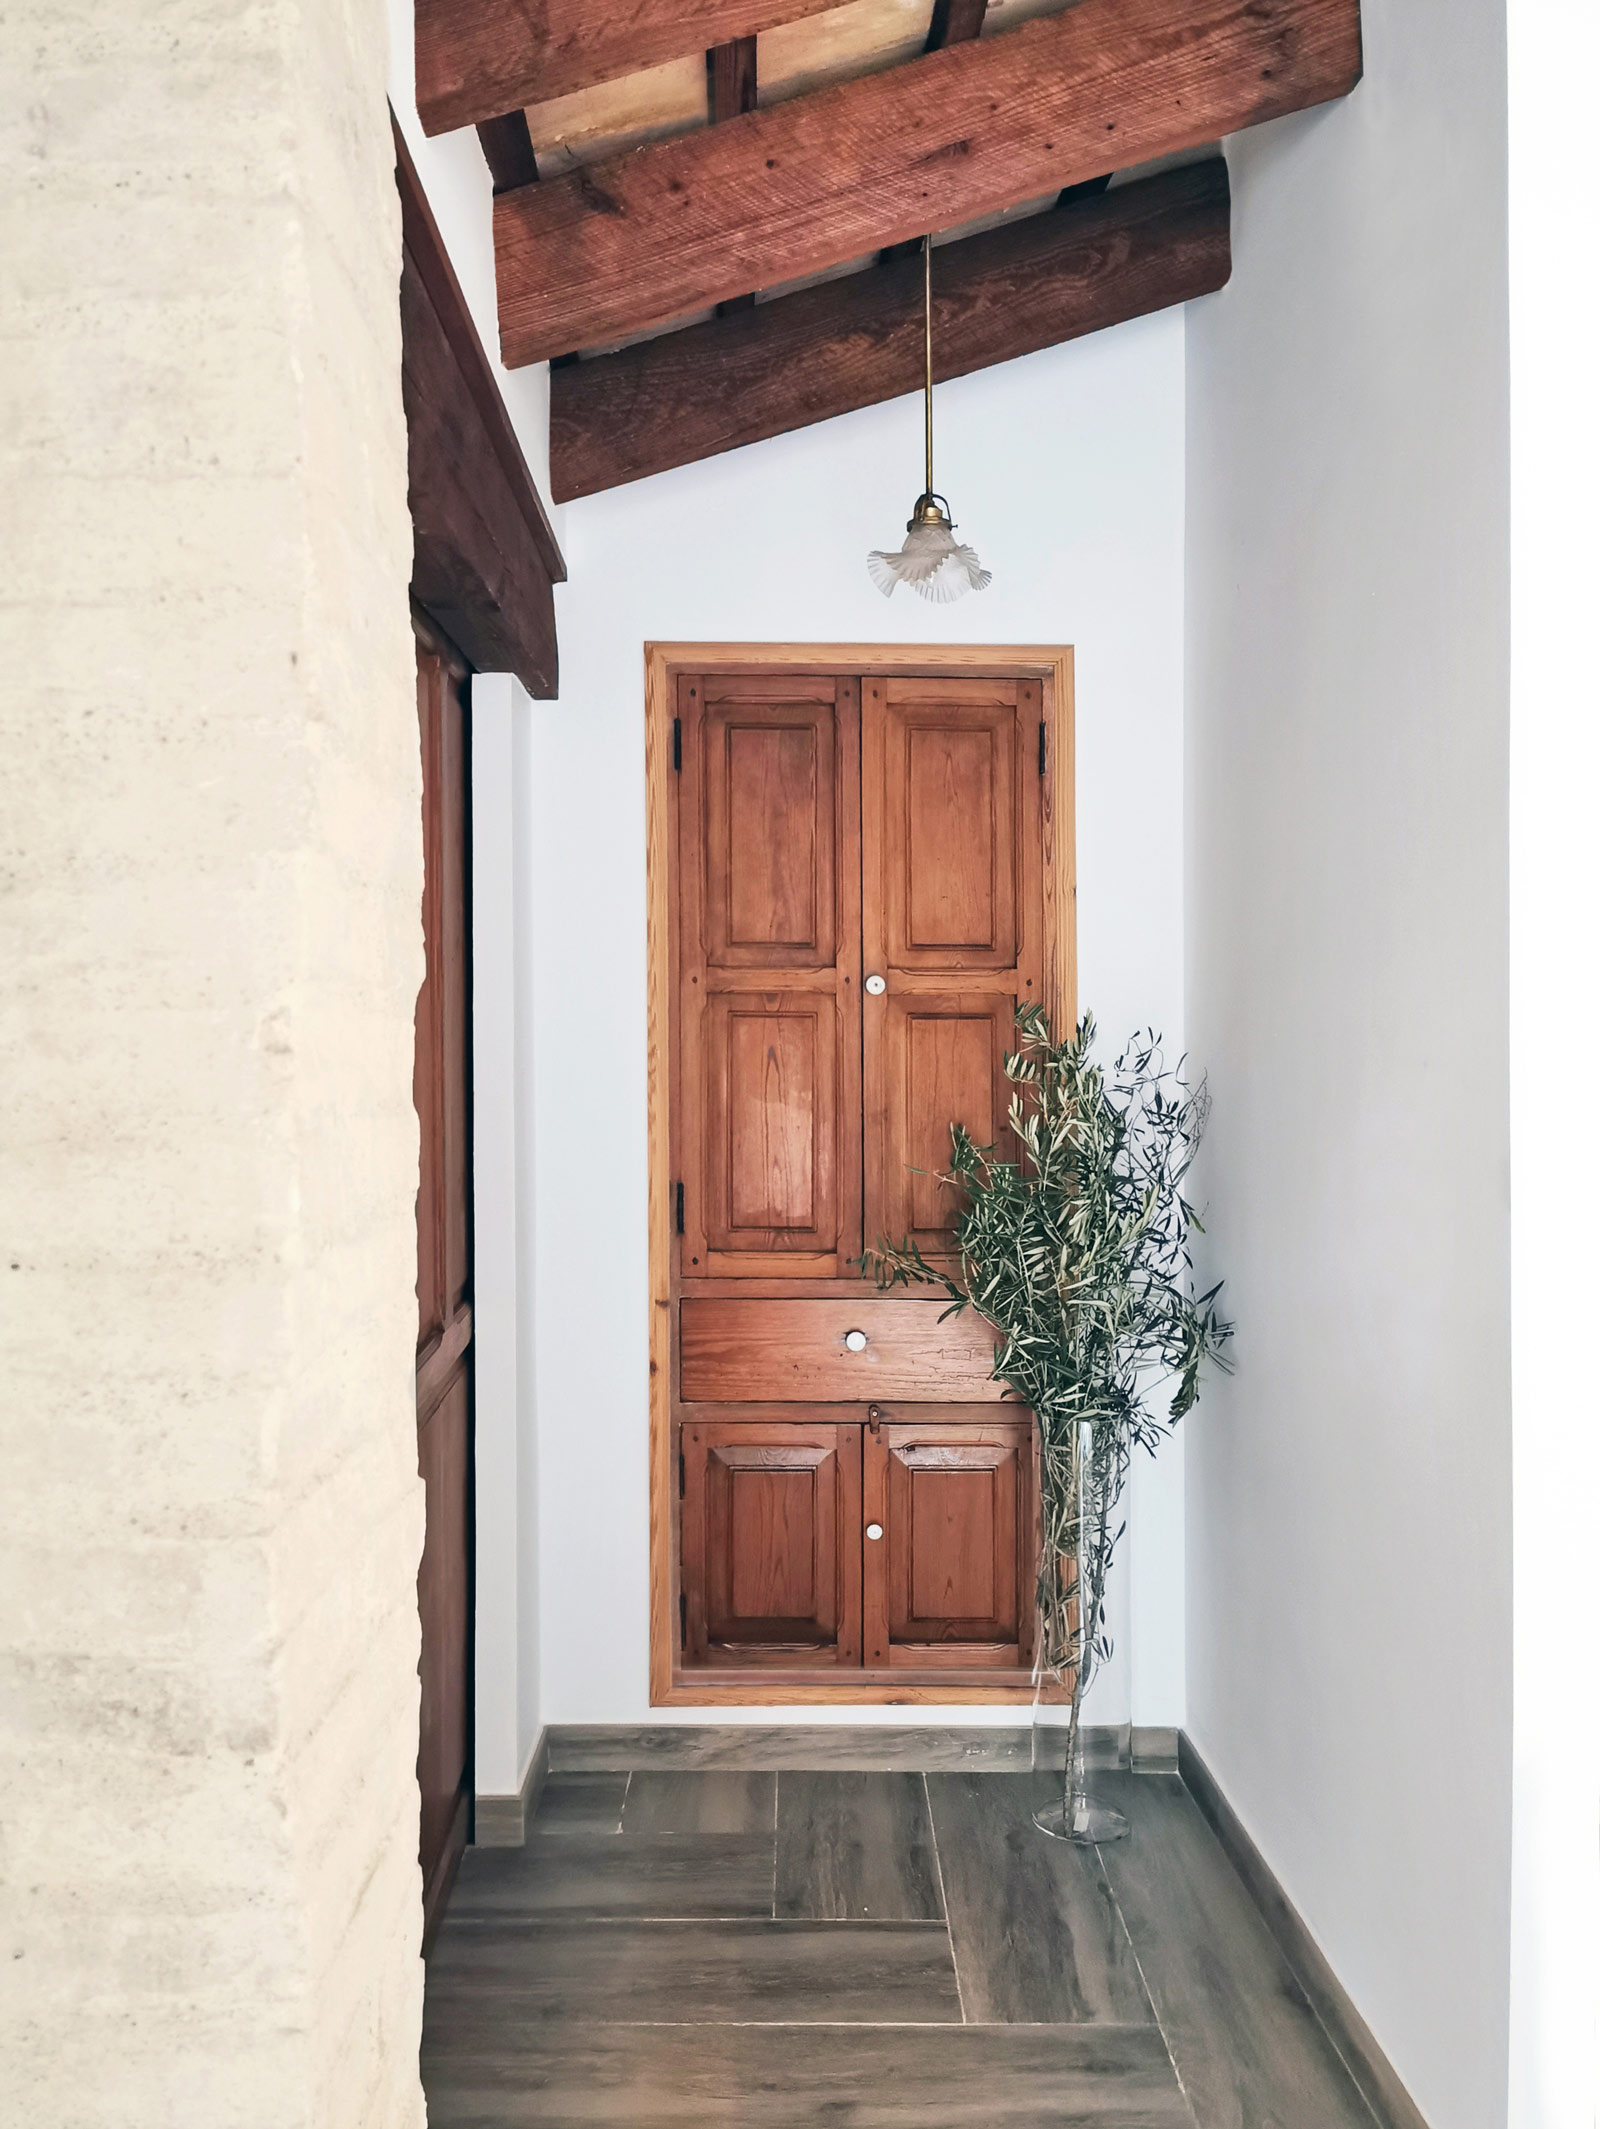 Pasillo con puerta de madera, paredes blancas, techos altos inclinados con vigas de madera